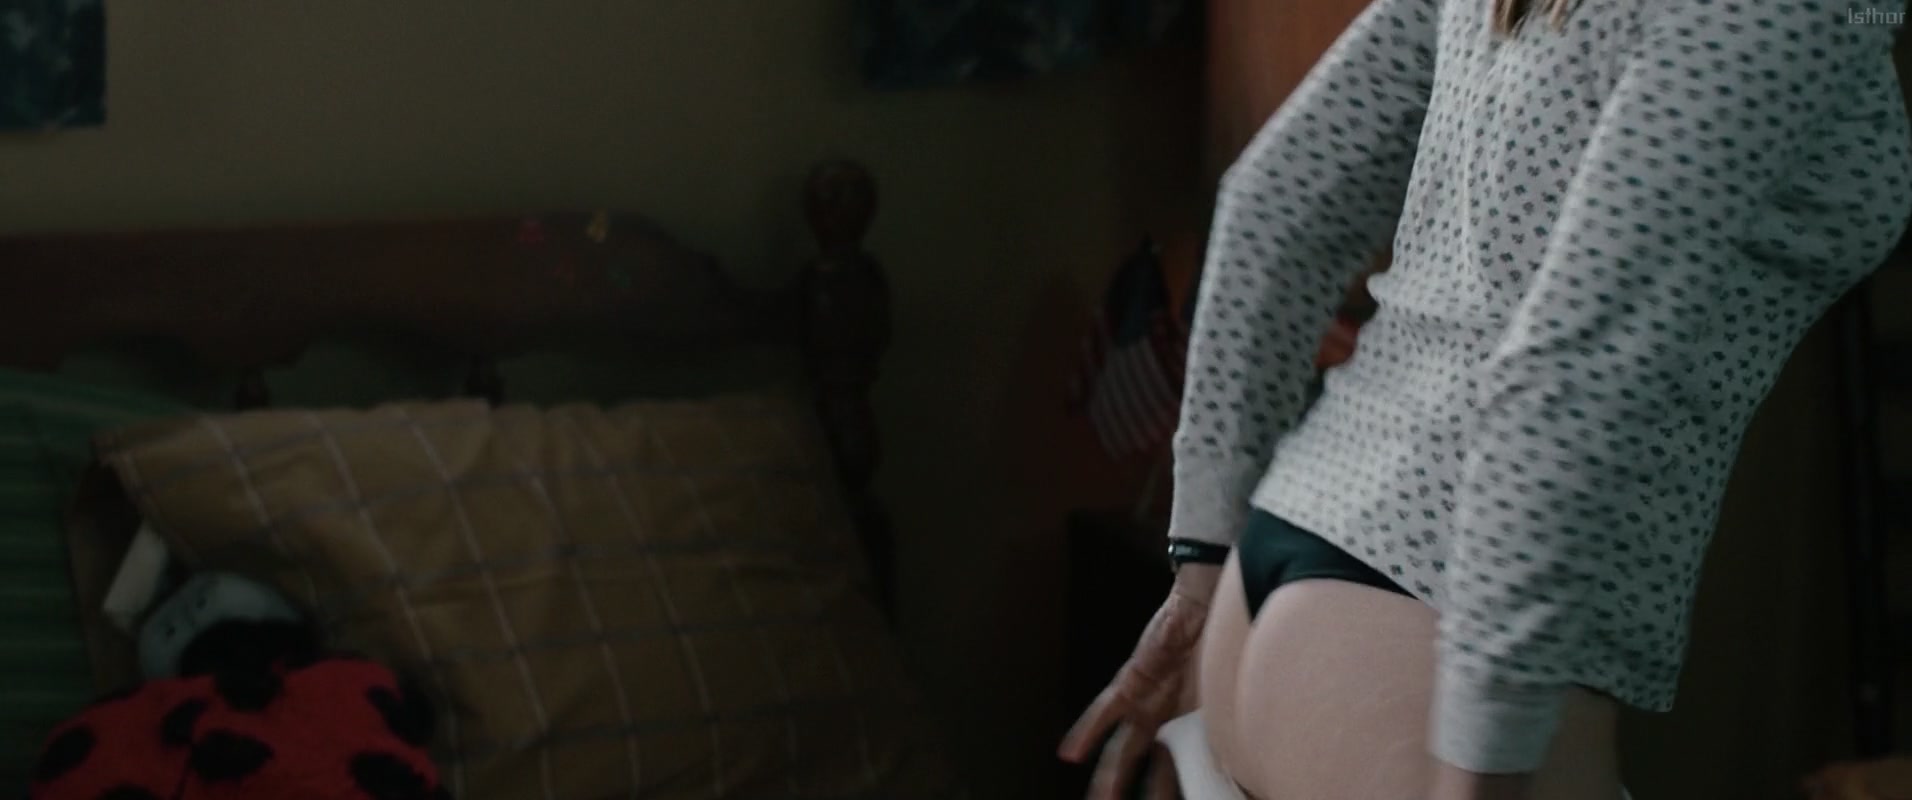 “Elizabeth Olsen Thong Scene With Slo-mo (Wind River) [VIDEO] https://t.co/...